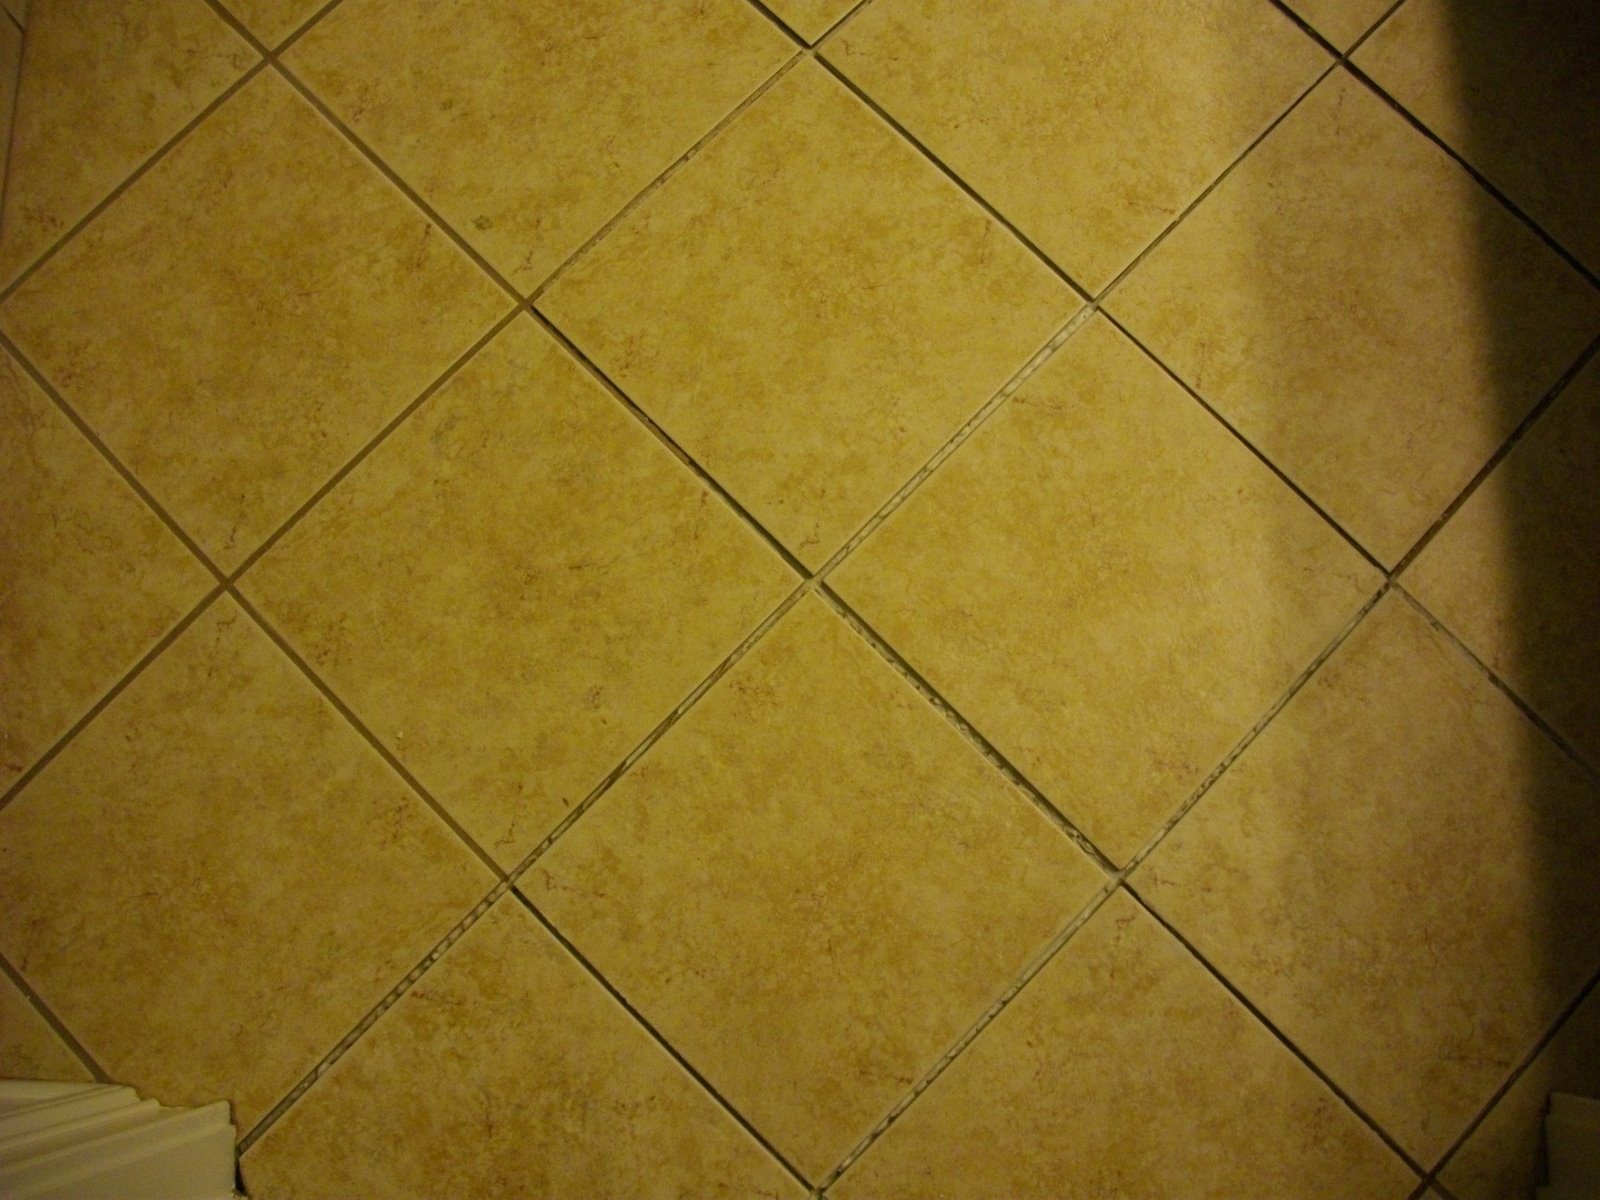 [M.+Bathroom+Tile+7-13-08.jpg]